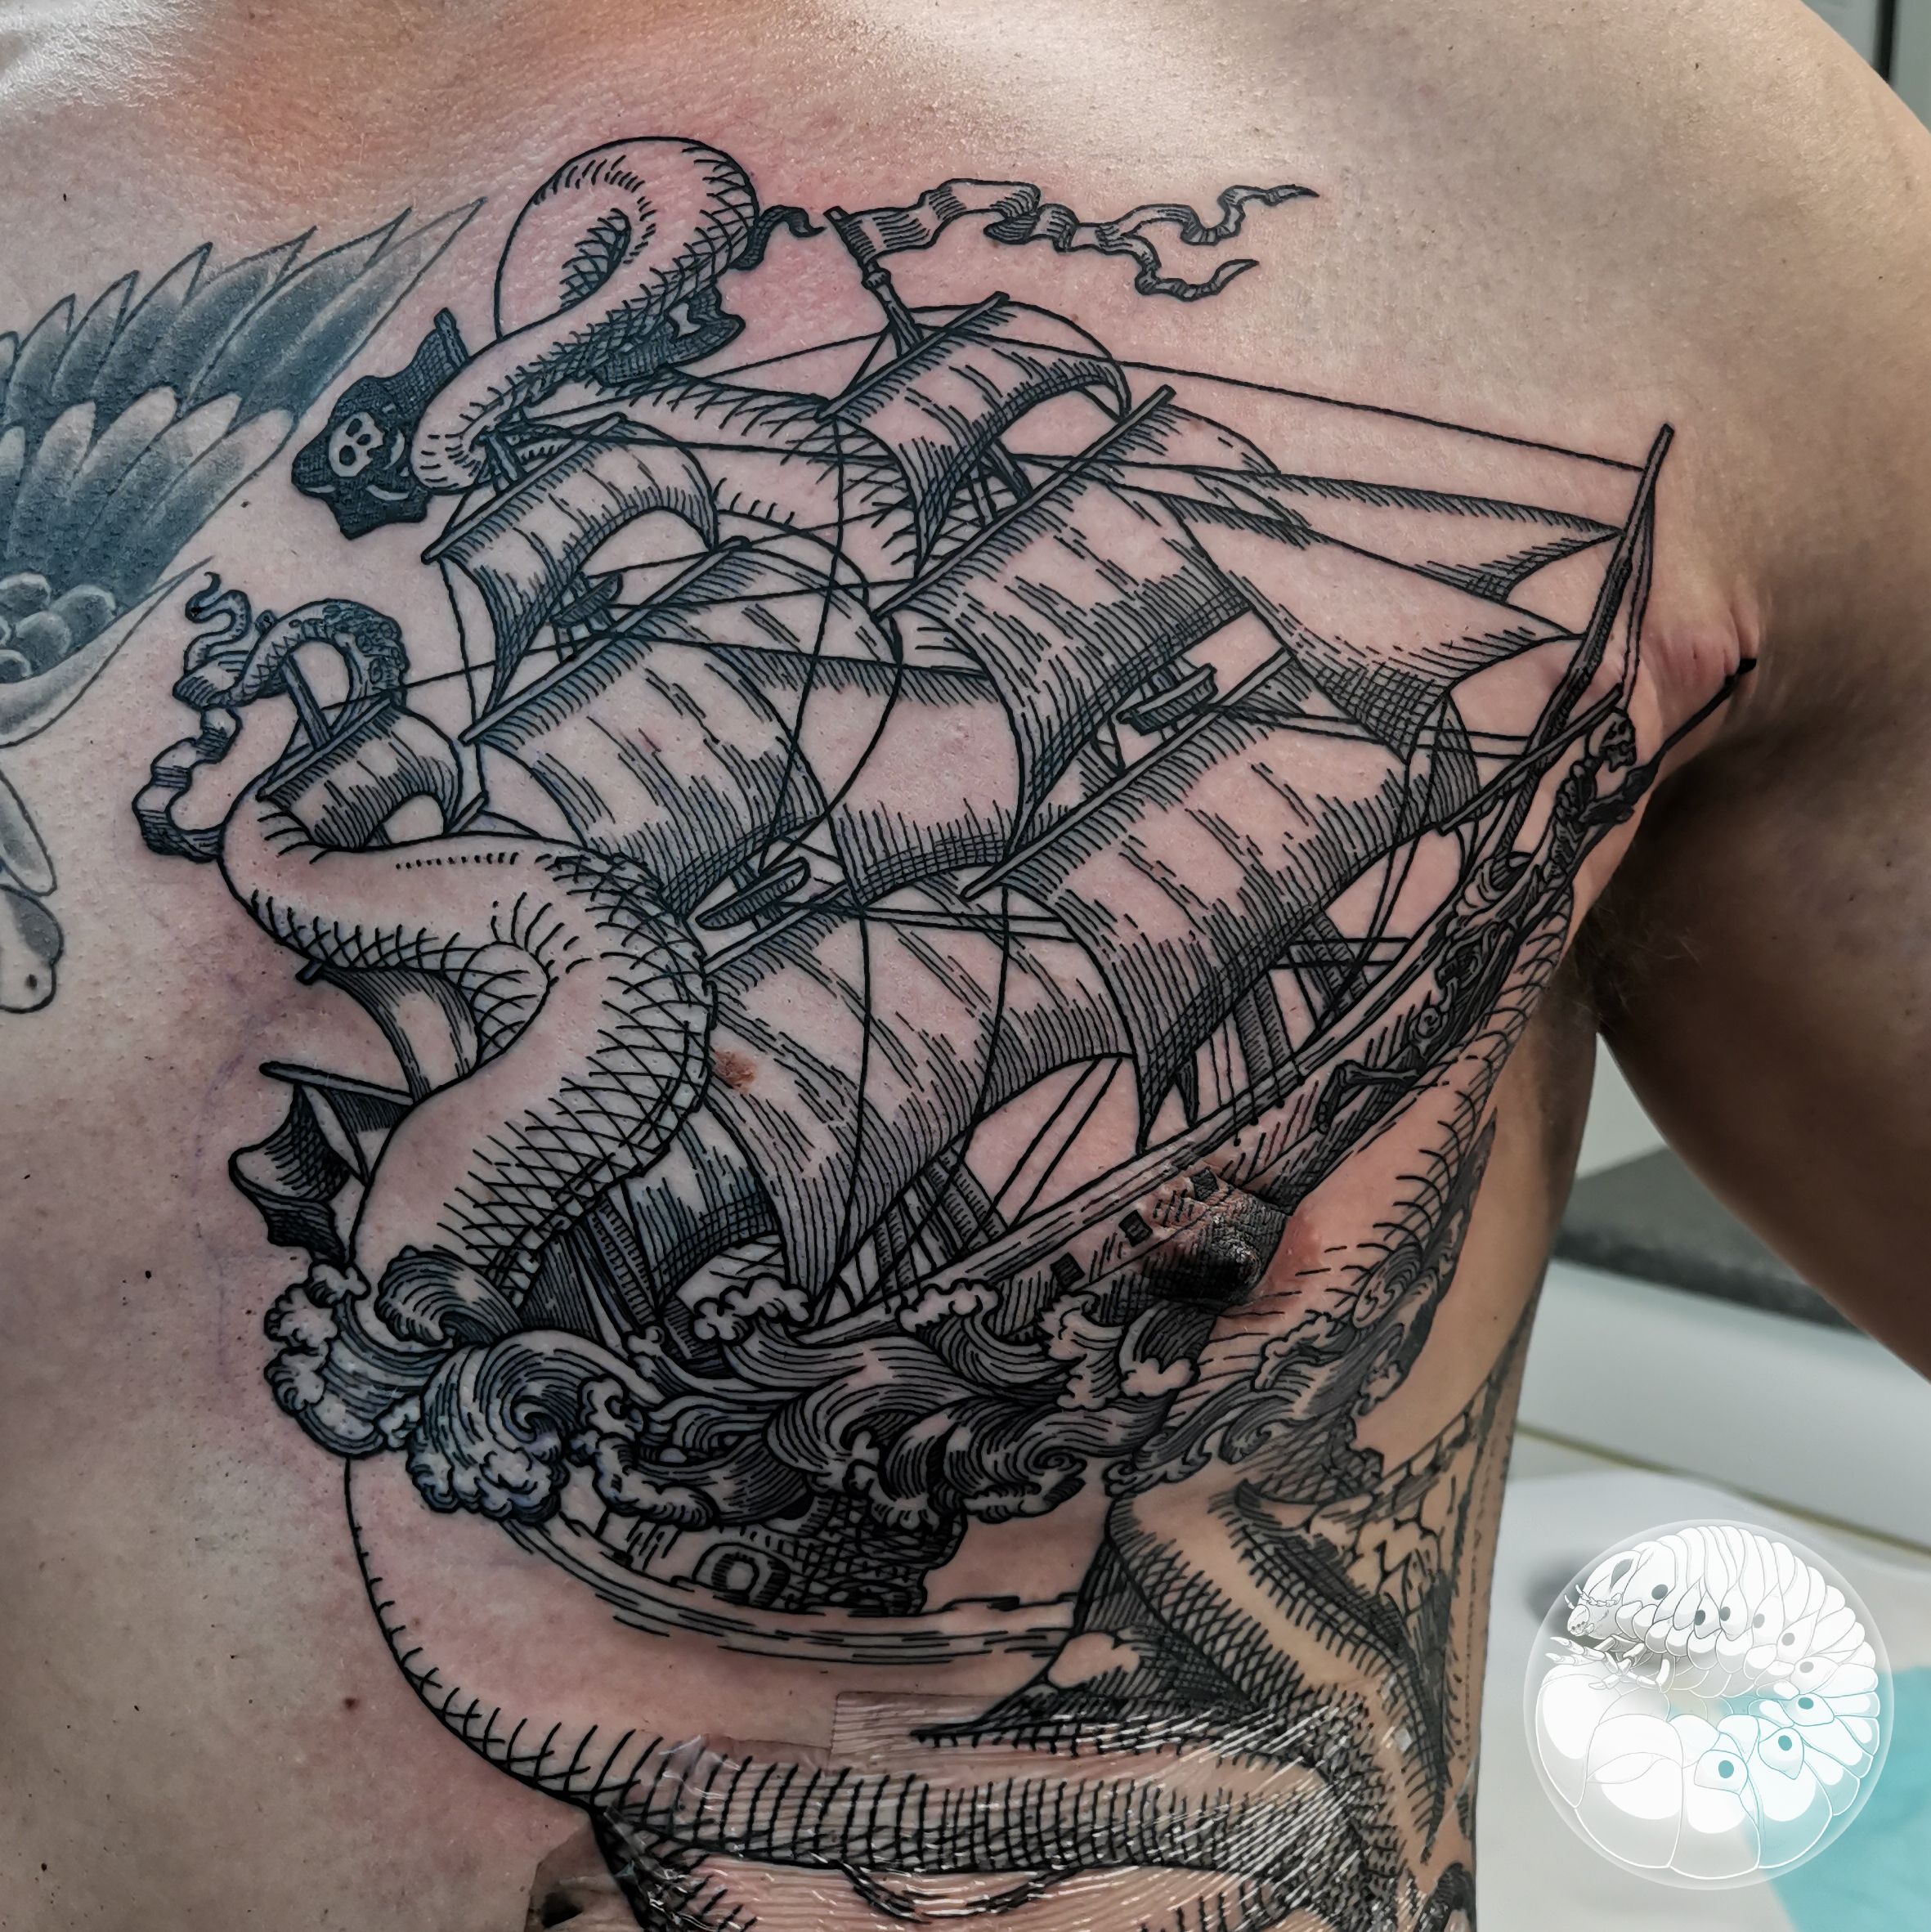 Tattoo uploaded by Andrey AngryArmTattoo  Ship kraken  Tattoodo